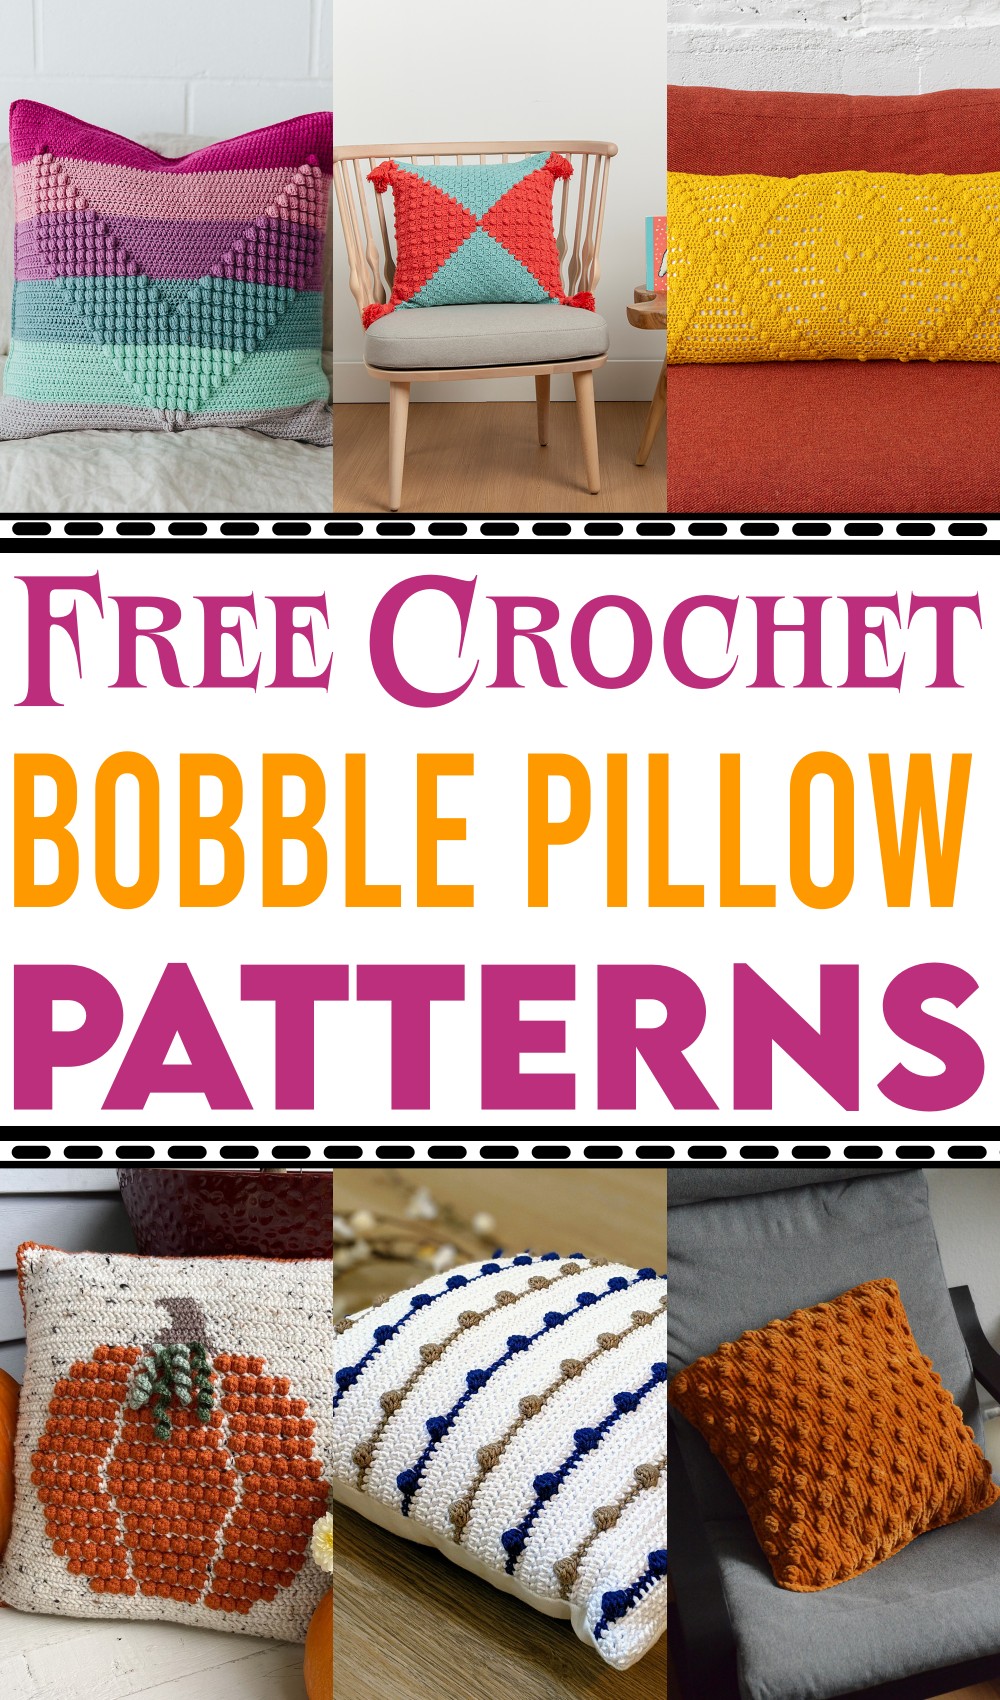 Free Crochet Bobble Pillow Patterns